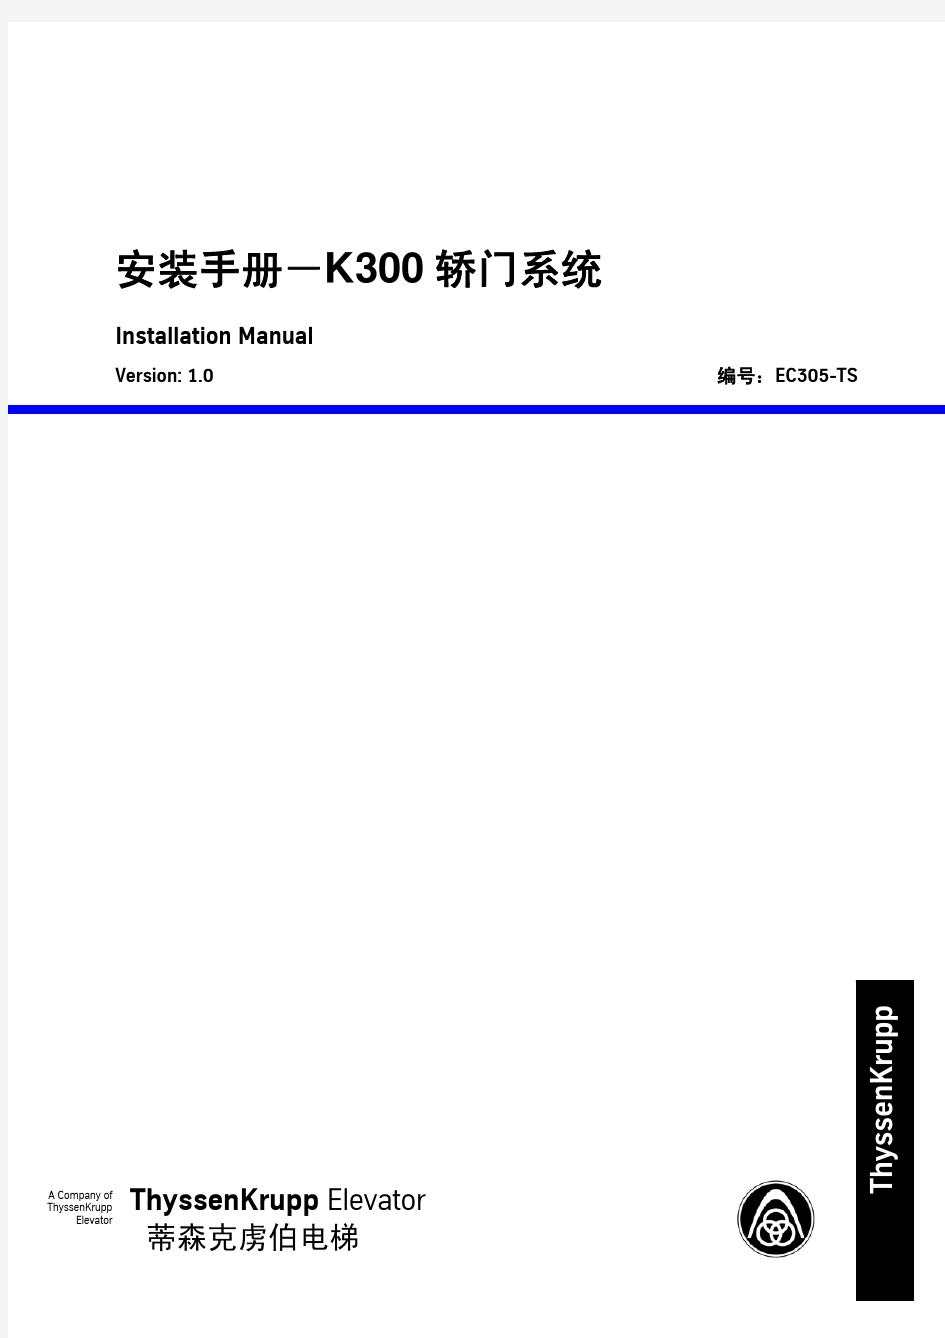 EC305-TS K300轿门系统安装手册(1 0)